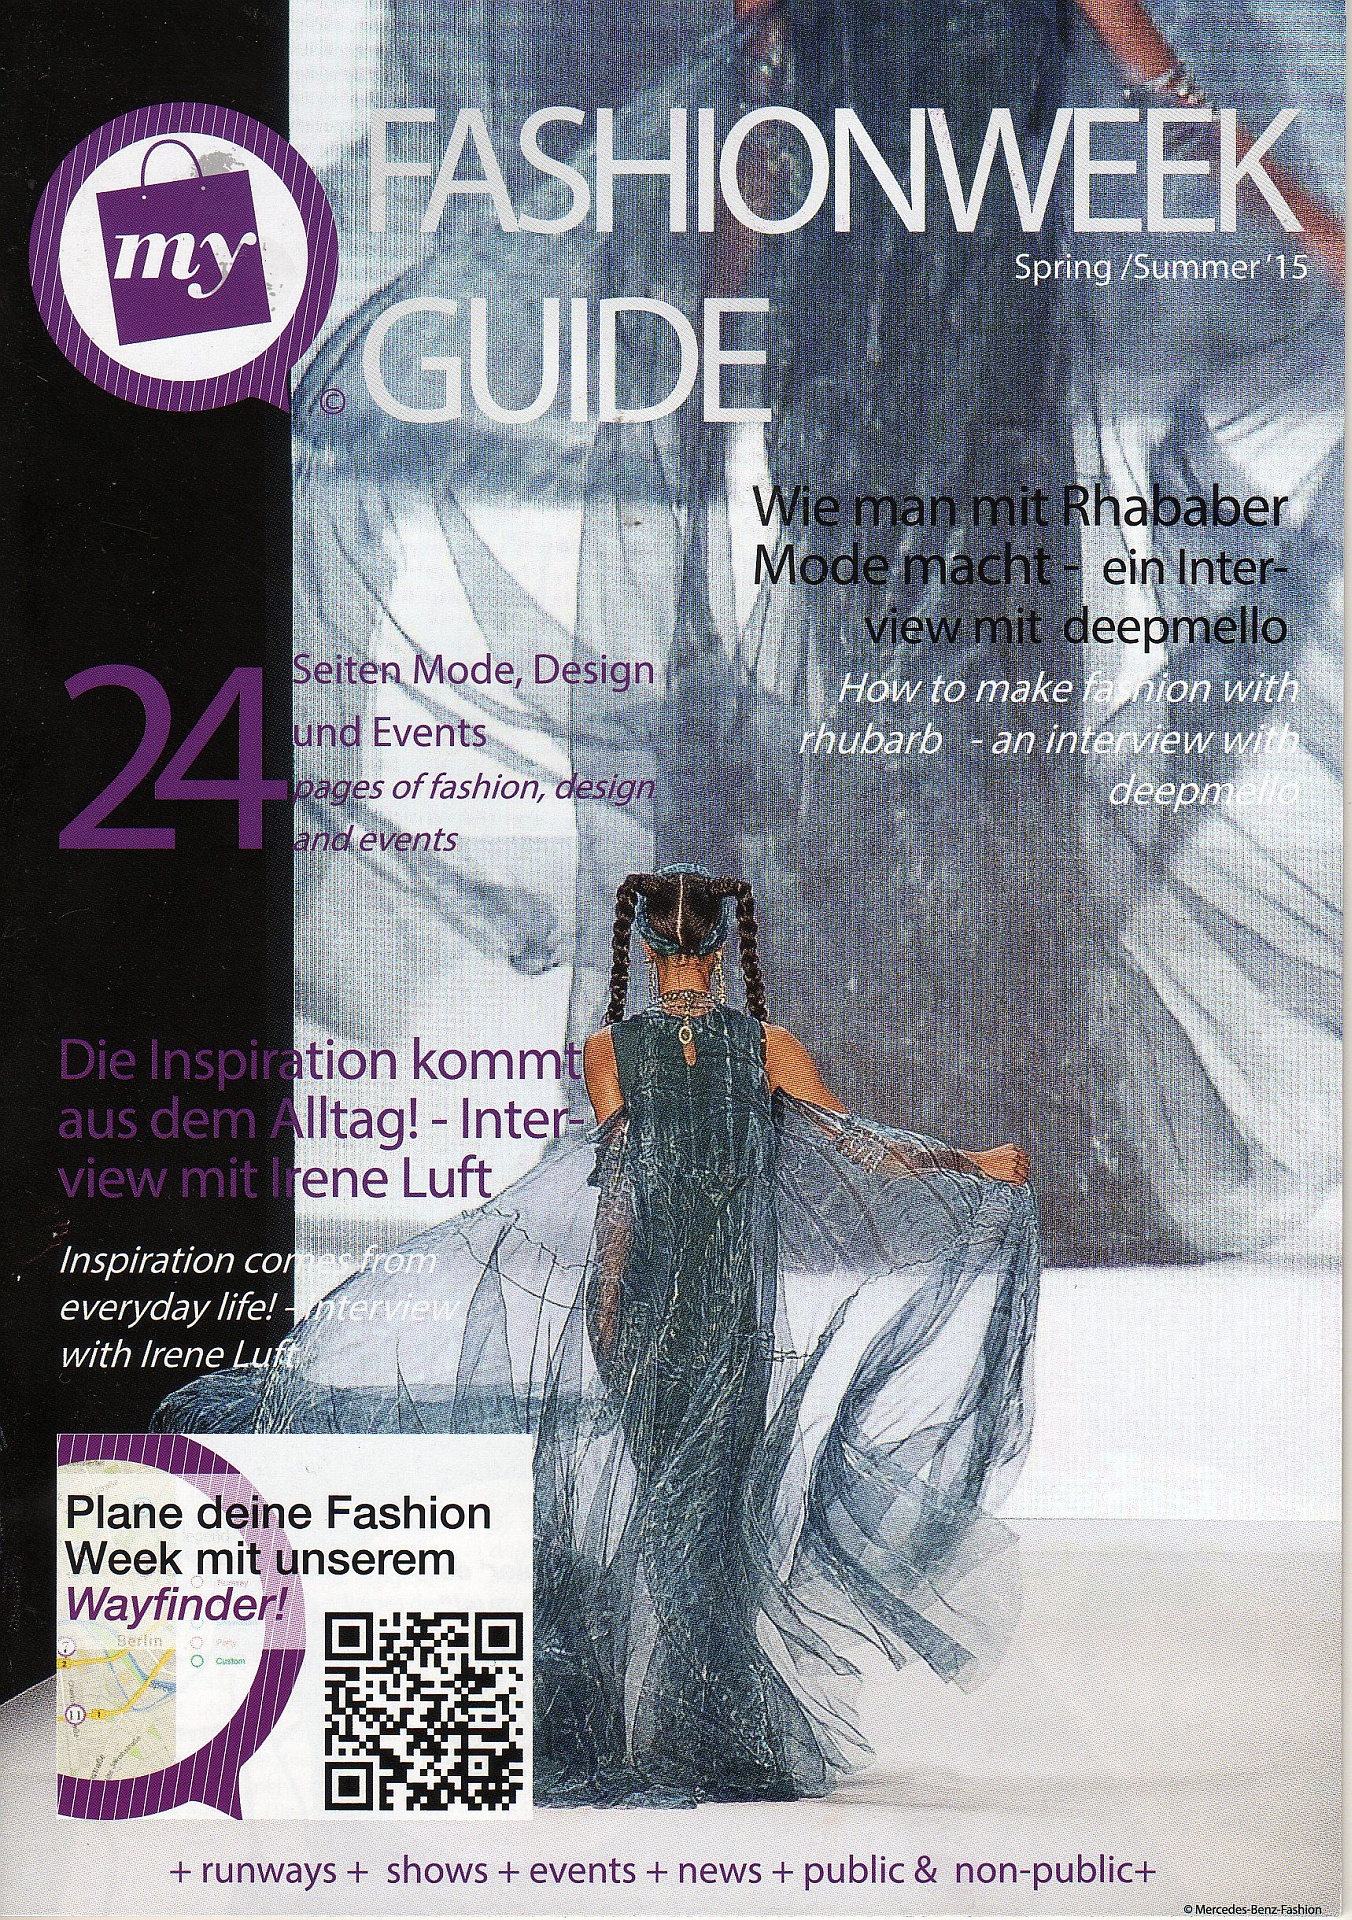 Fashionweek Guide als Heft